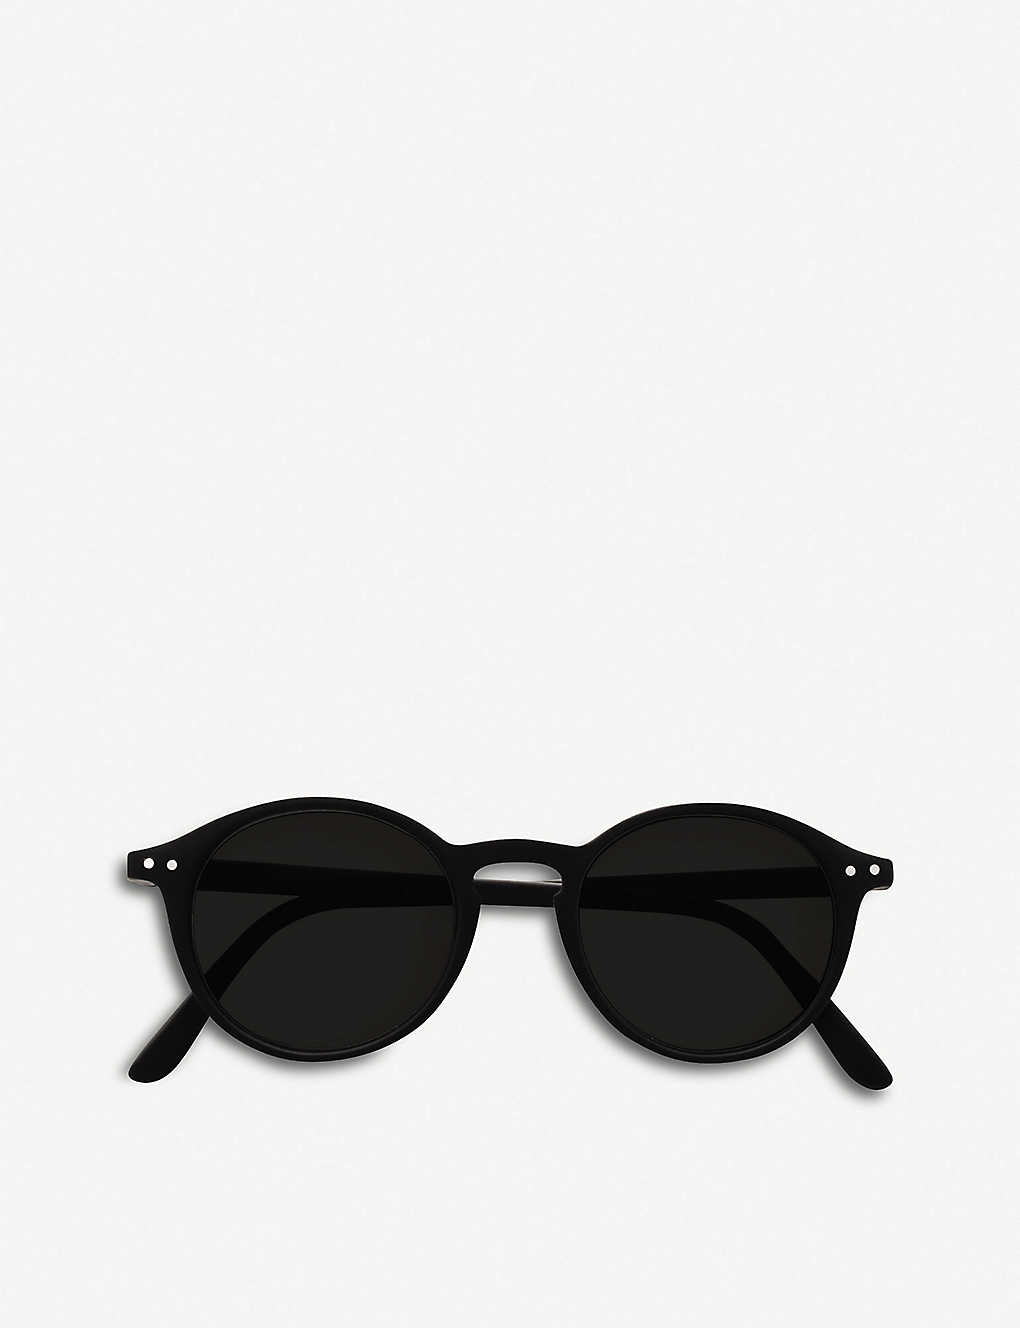 Shop Izipizi Women's Sun #d Sunglasses